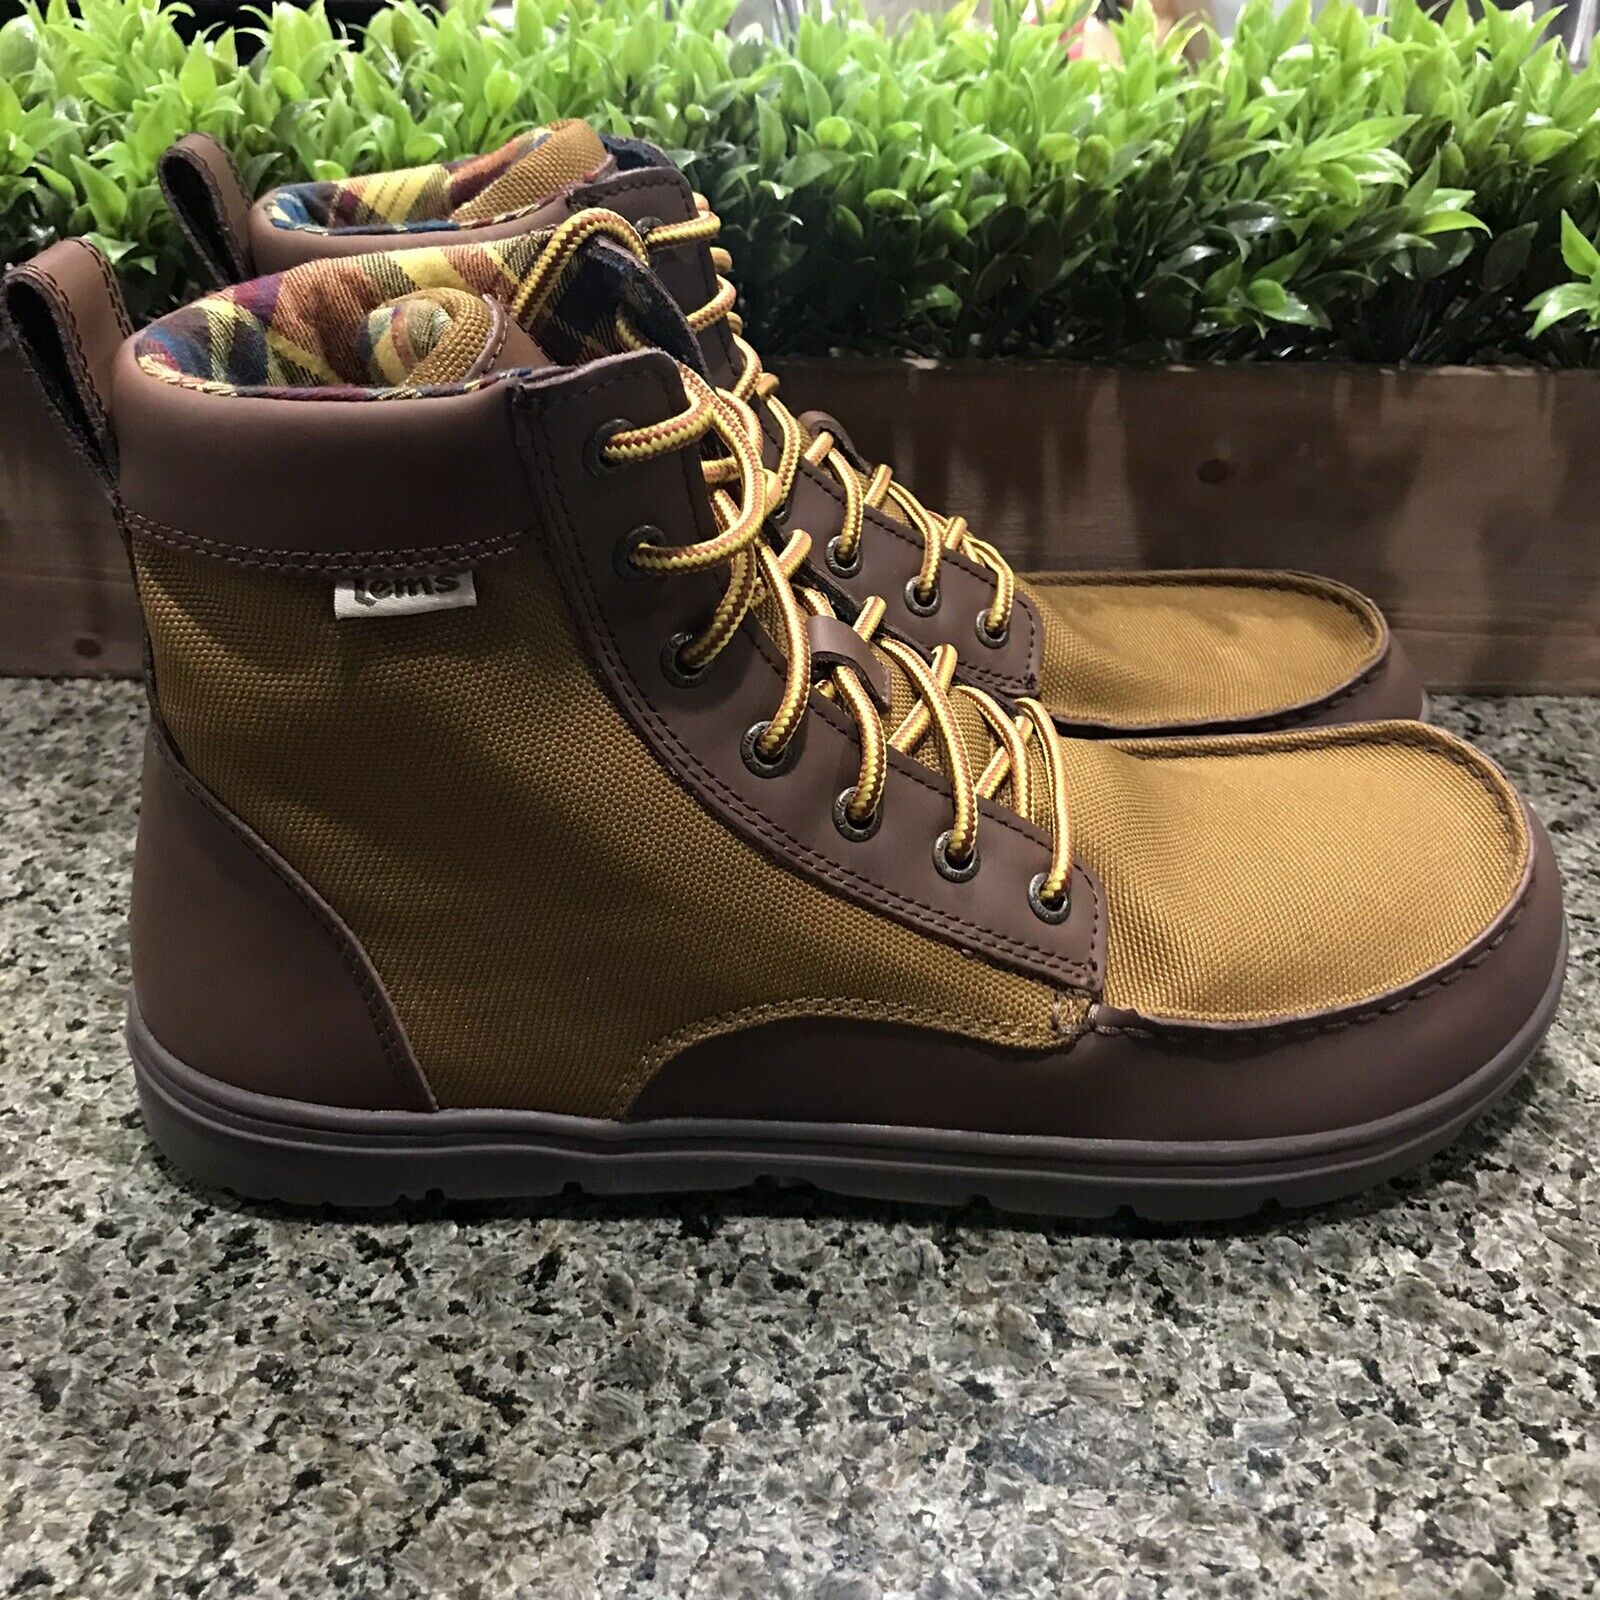 Lems Boulder Boots “Buckeye” Minimal Hiking Zero Drop Shoes Men’s Size 4.5 36 EU